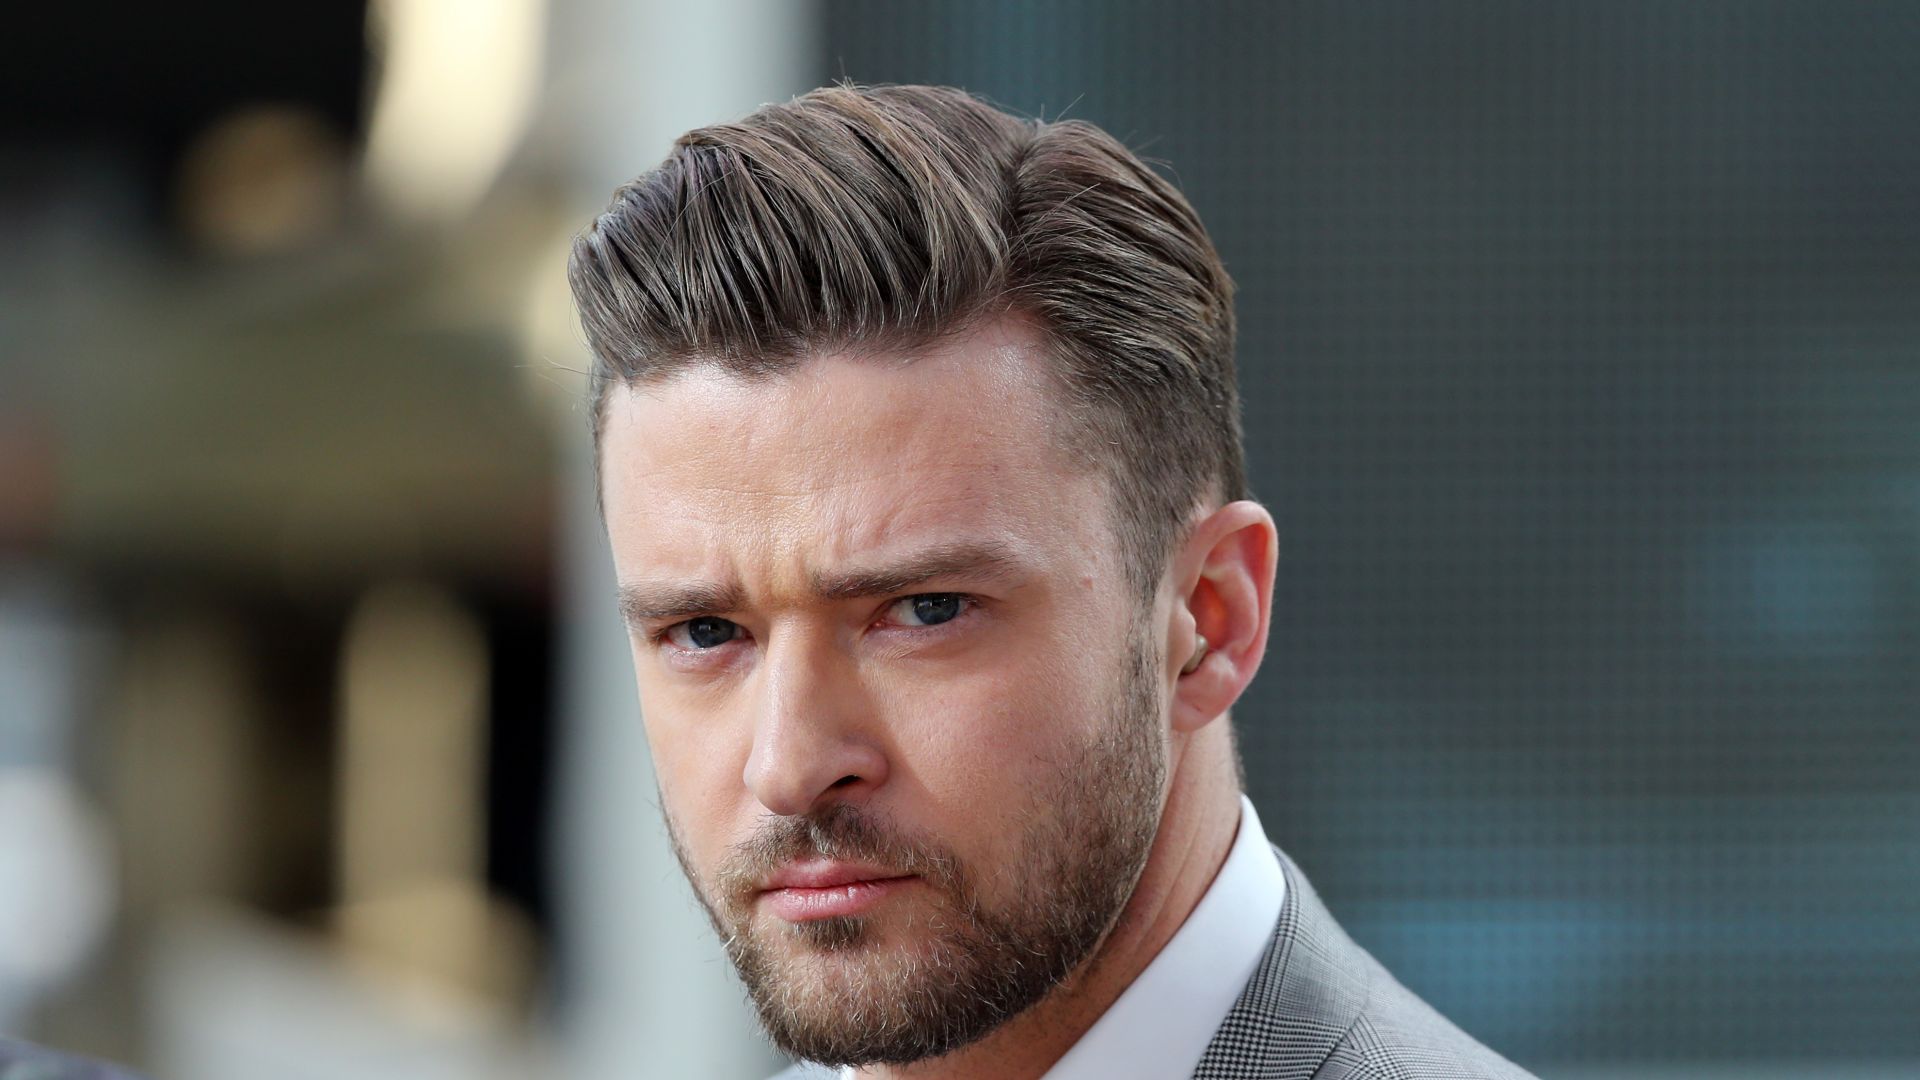 Джастин Тимбердейк, Каннский кинофестиваль 2016, красная дорожка, Justin Timberlake, Can't Stop the Feeling, Cannes Film Festival 2016, Most popular celebs (horizontal)